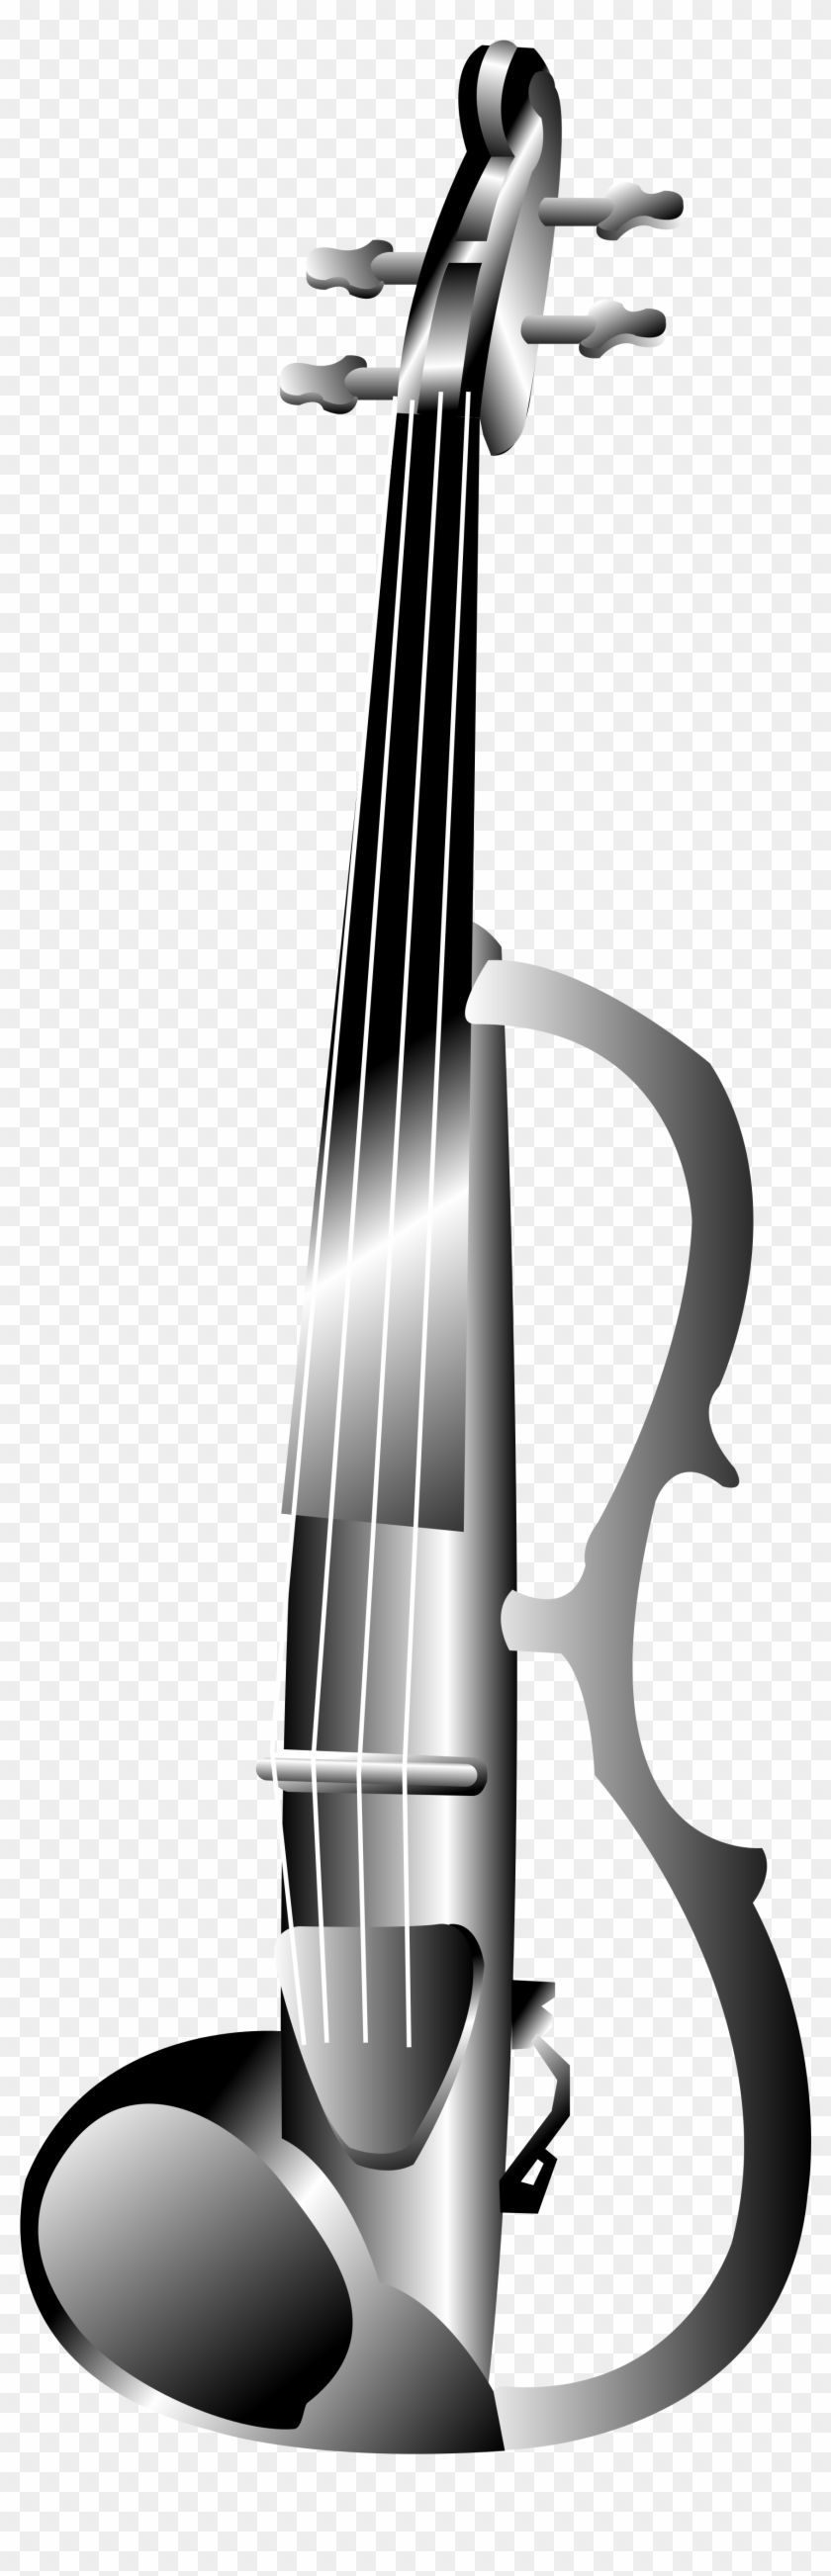 Violin Clip Art Black And White Clipart - Violin Png #182947